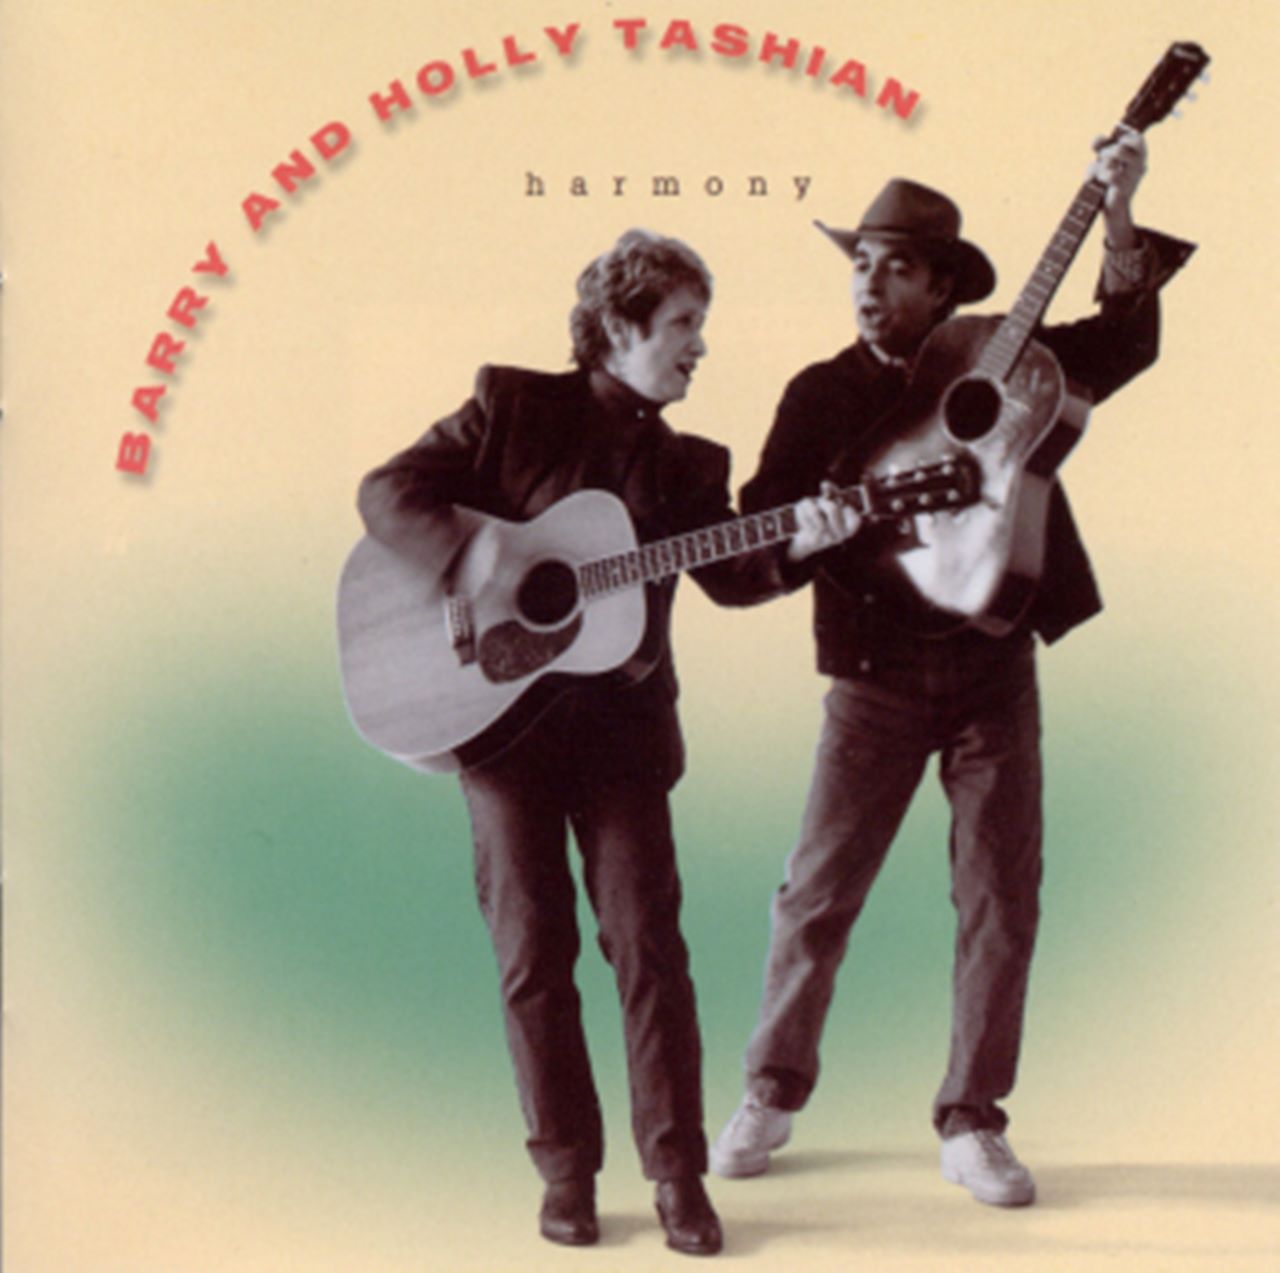 Barry & Holly Tashian - Harmony cover album